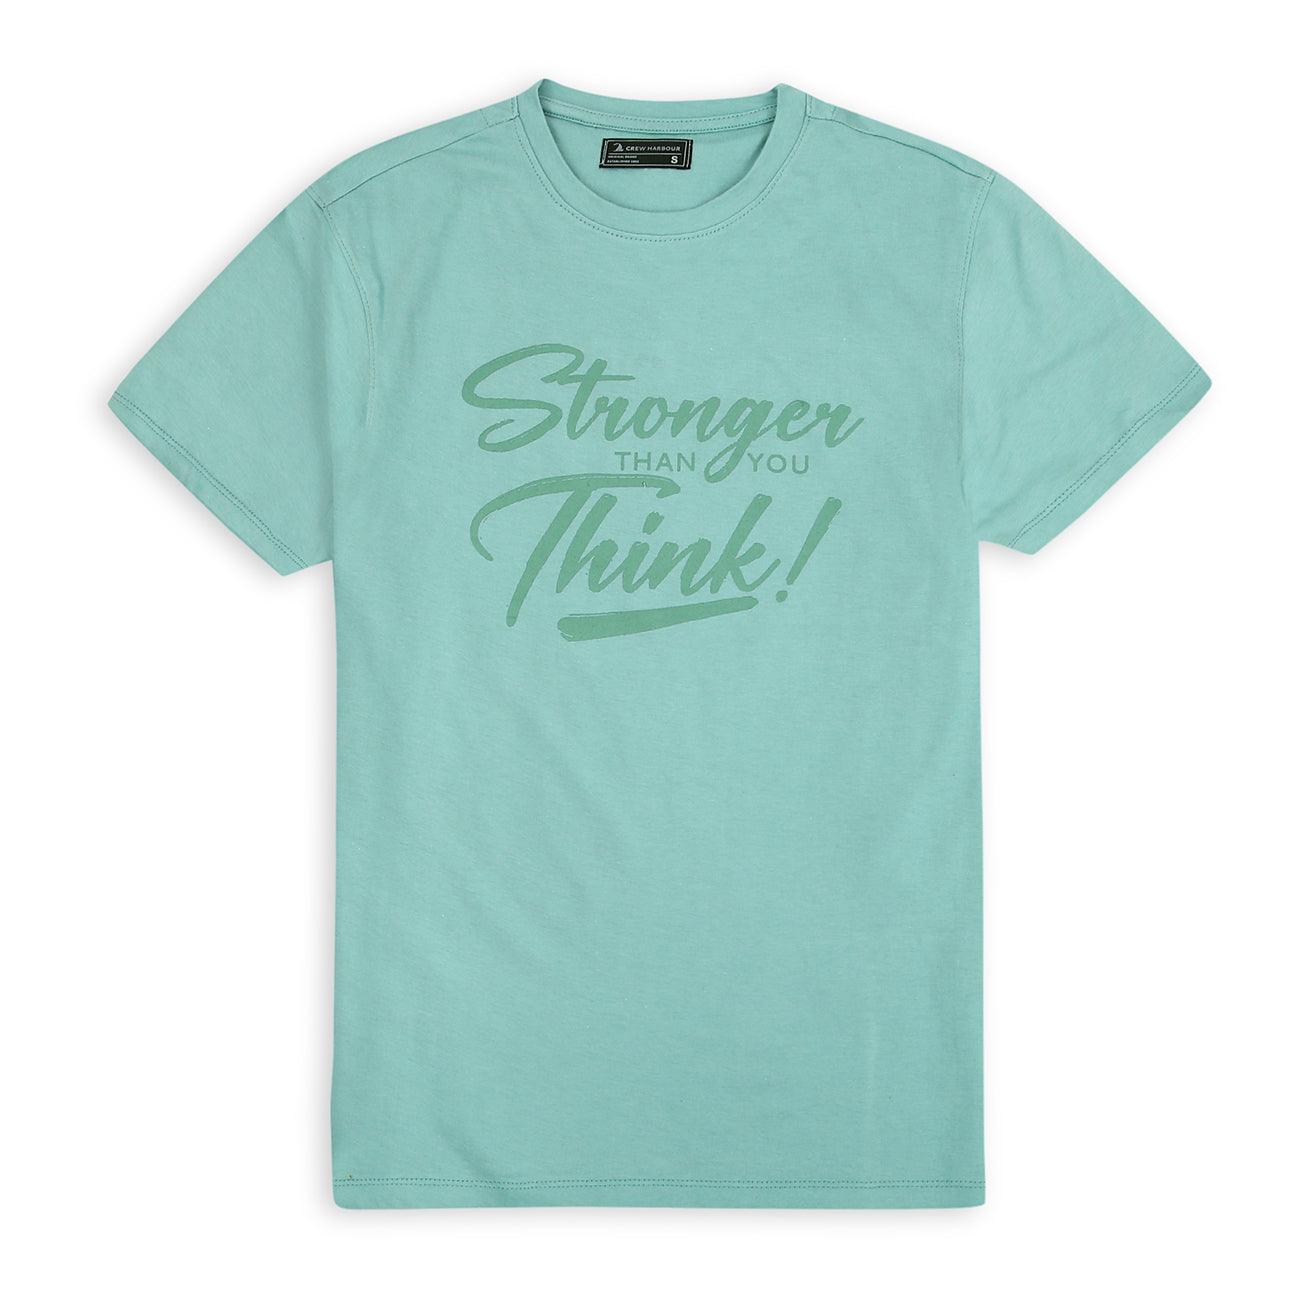 Men Premium Quality Soft Cotton Printed T-Shirt (CR-11700) - Brands River